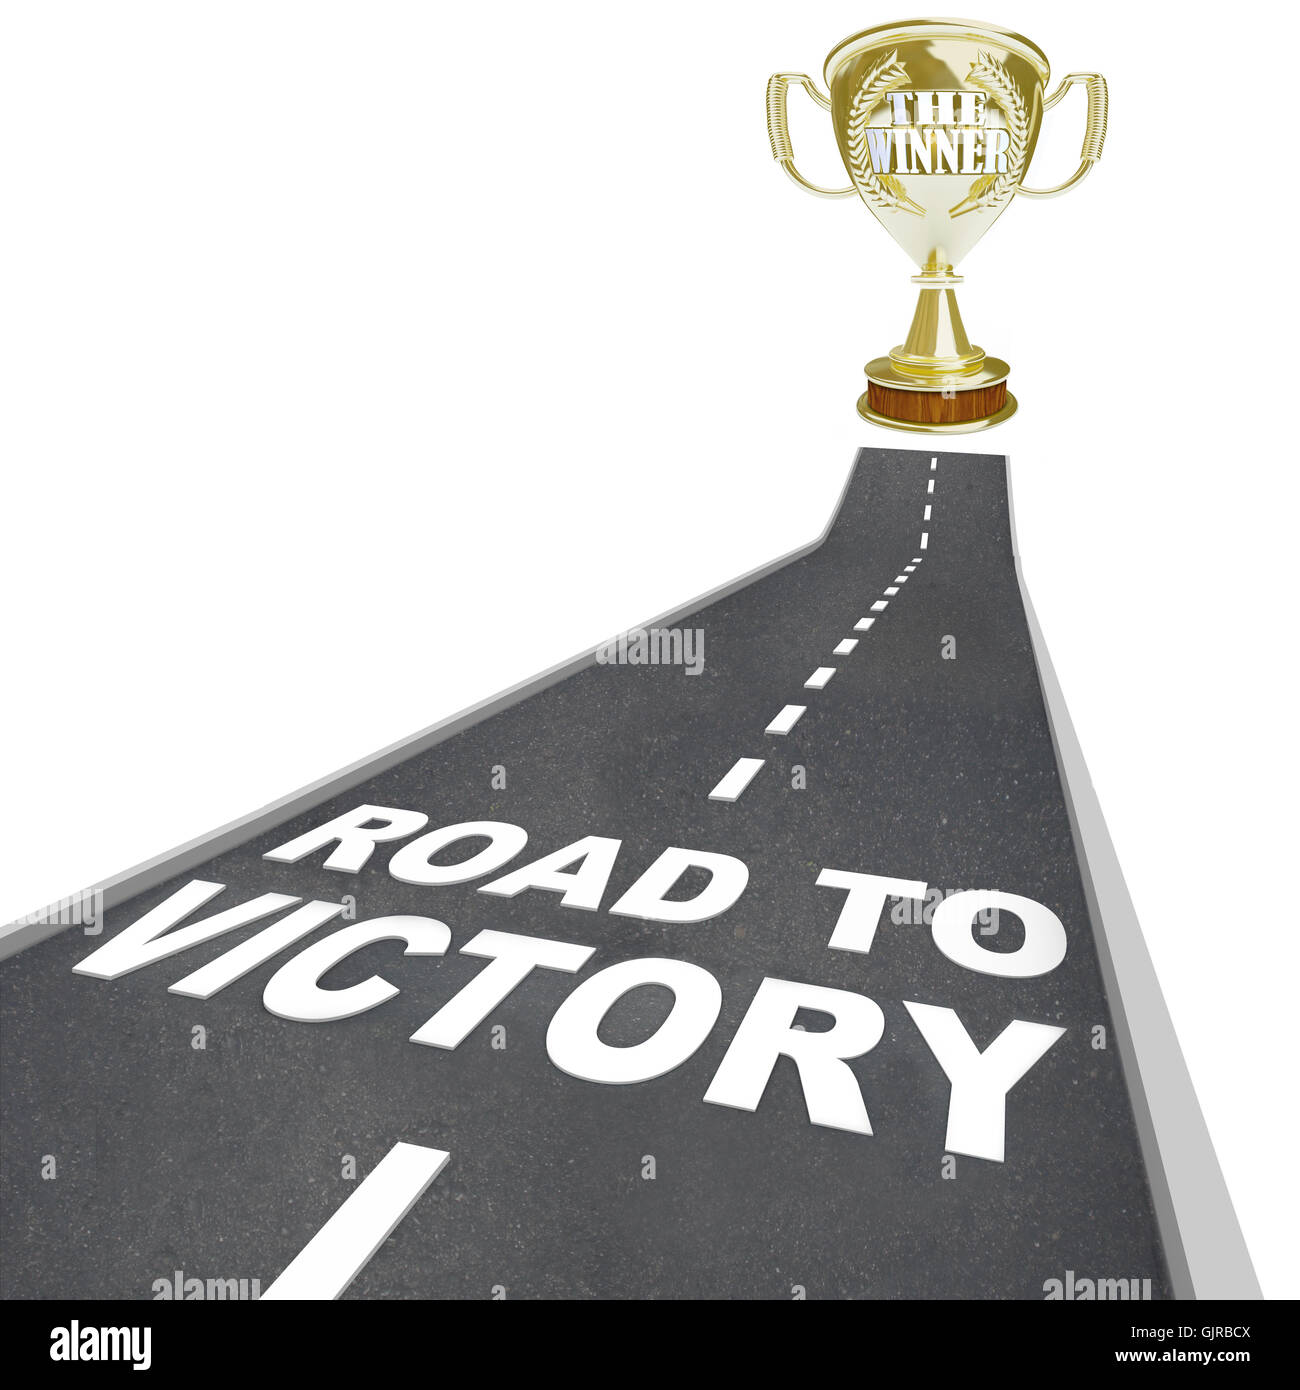 Road to Victory - Golden Winner Trophy Stock Photo